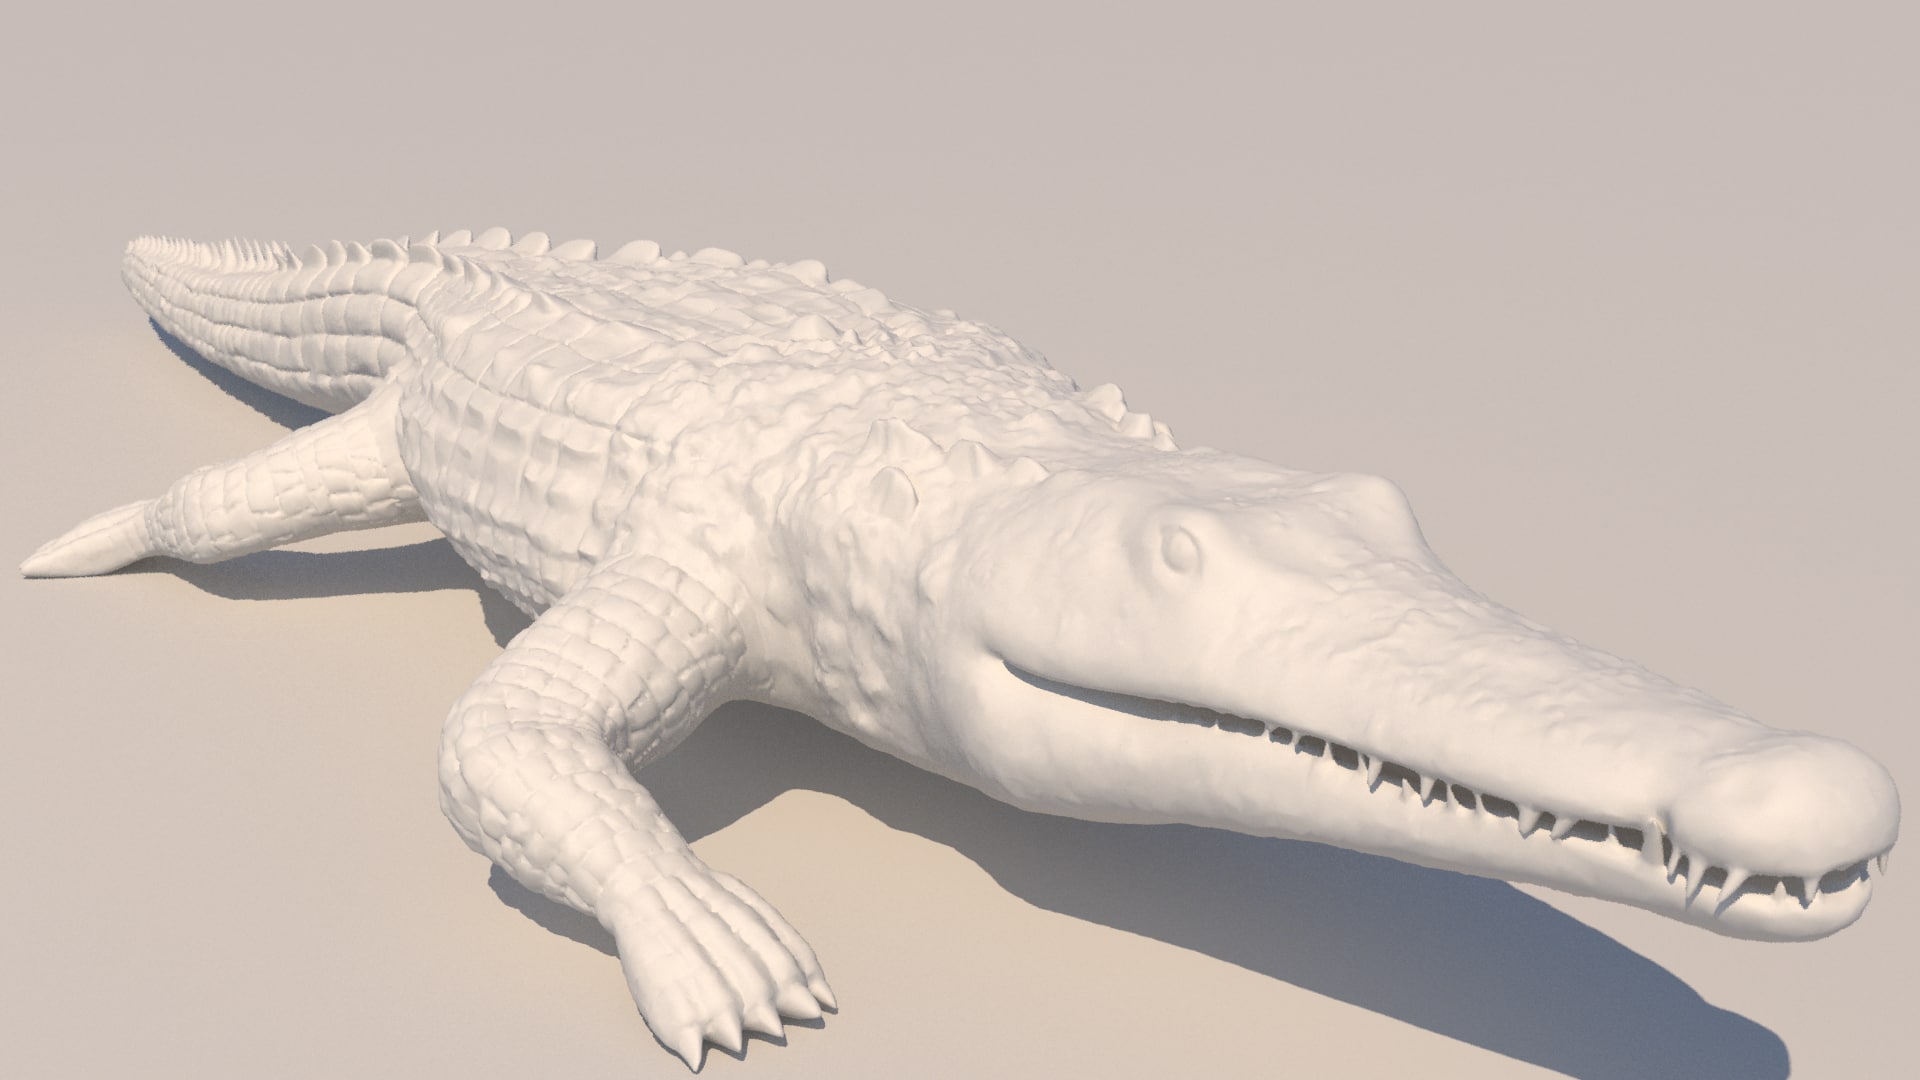 Ящерица 3 д. Croc 3d model. Crocodile 3d model. Poly model крокодил. Крокодил Лоу Поли.